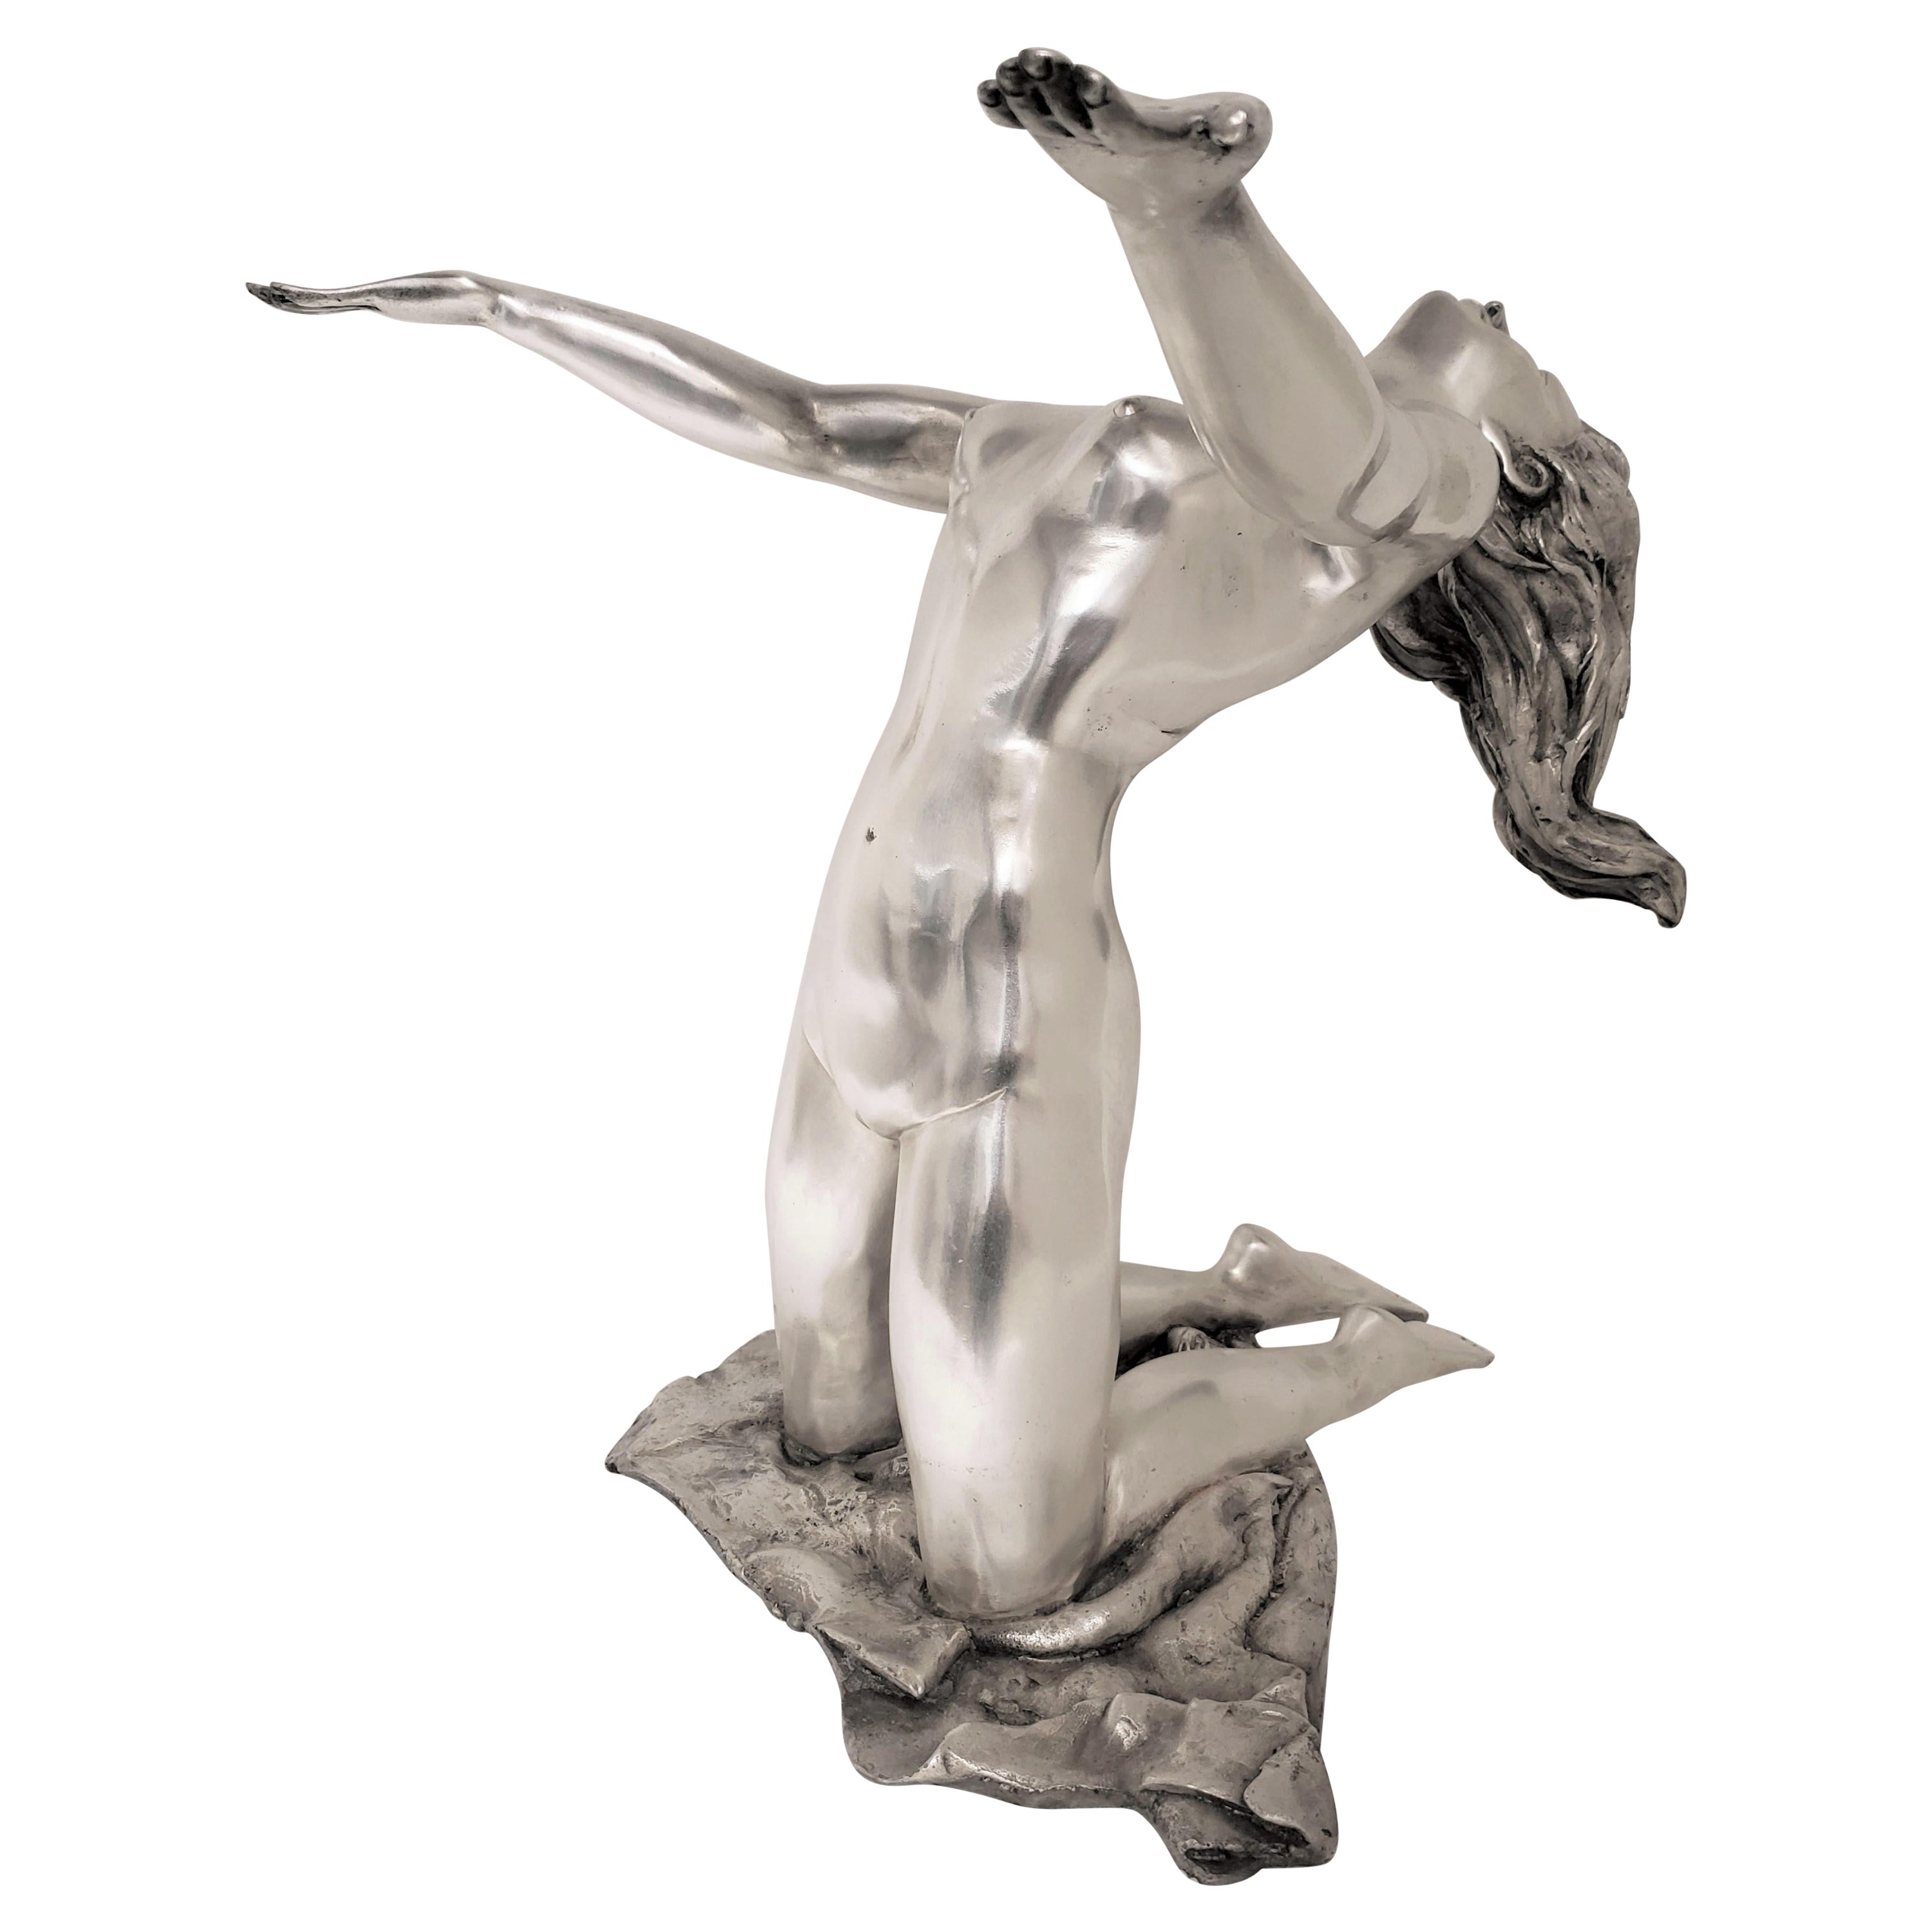 Grande sculpture originale, signée, en bronze argenté d'un nu féminin